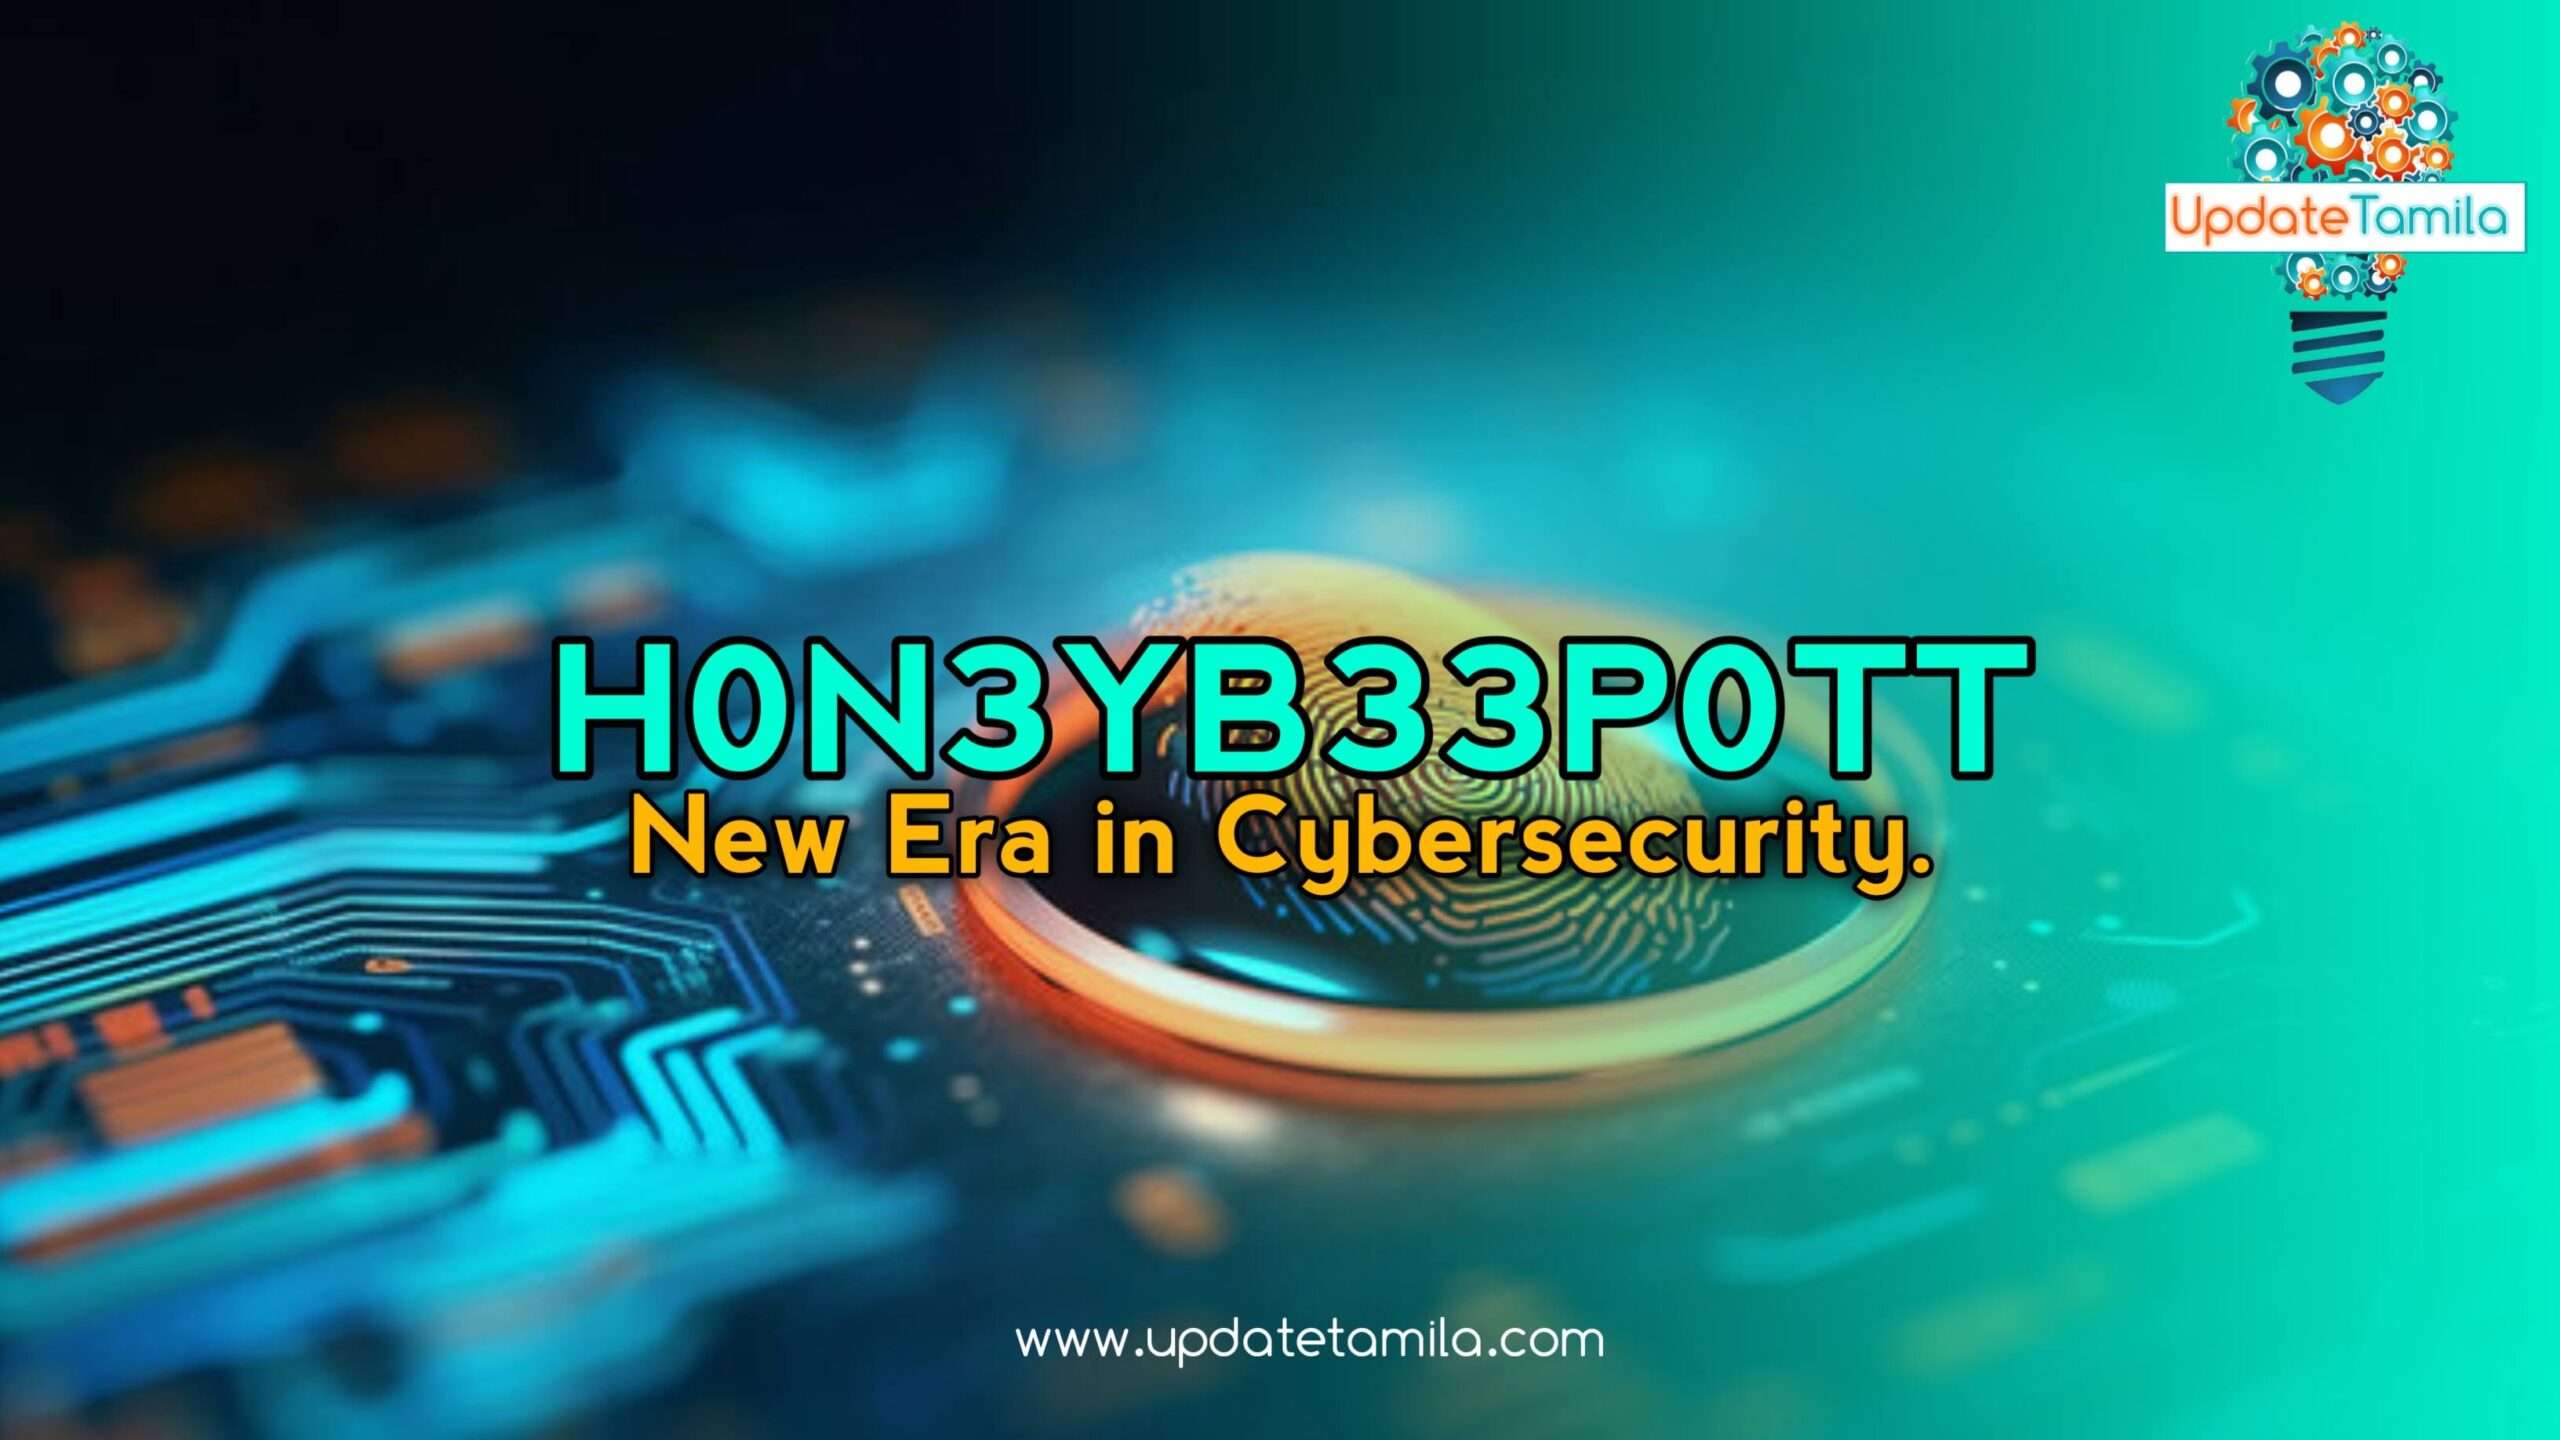 H0N3YB33P0TT: The Dawn of a New Era in Cybersecurity